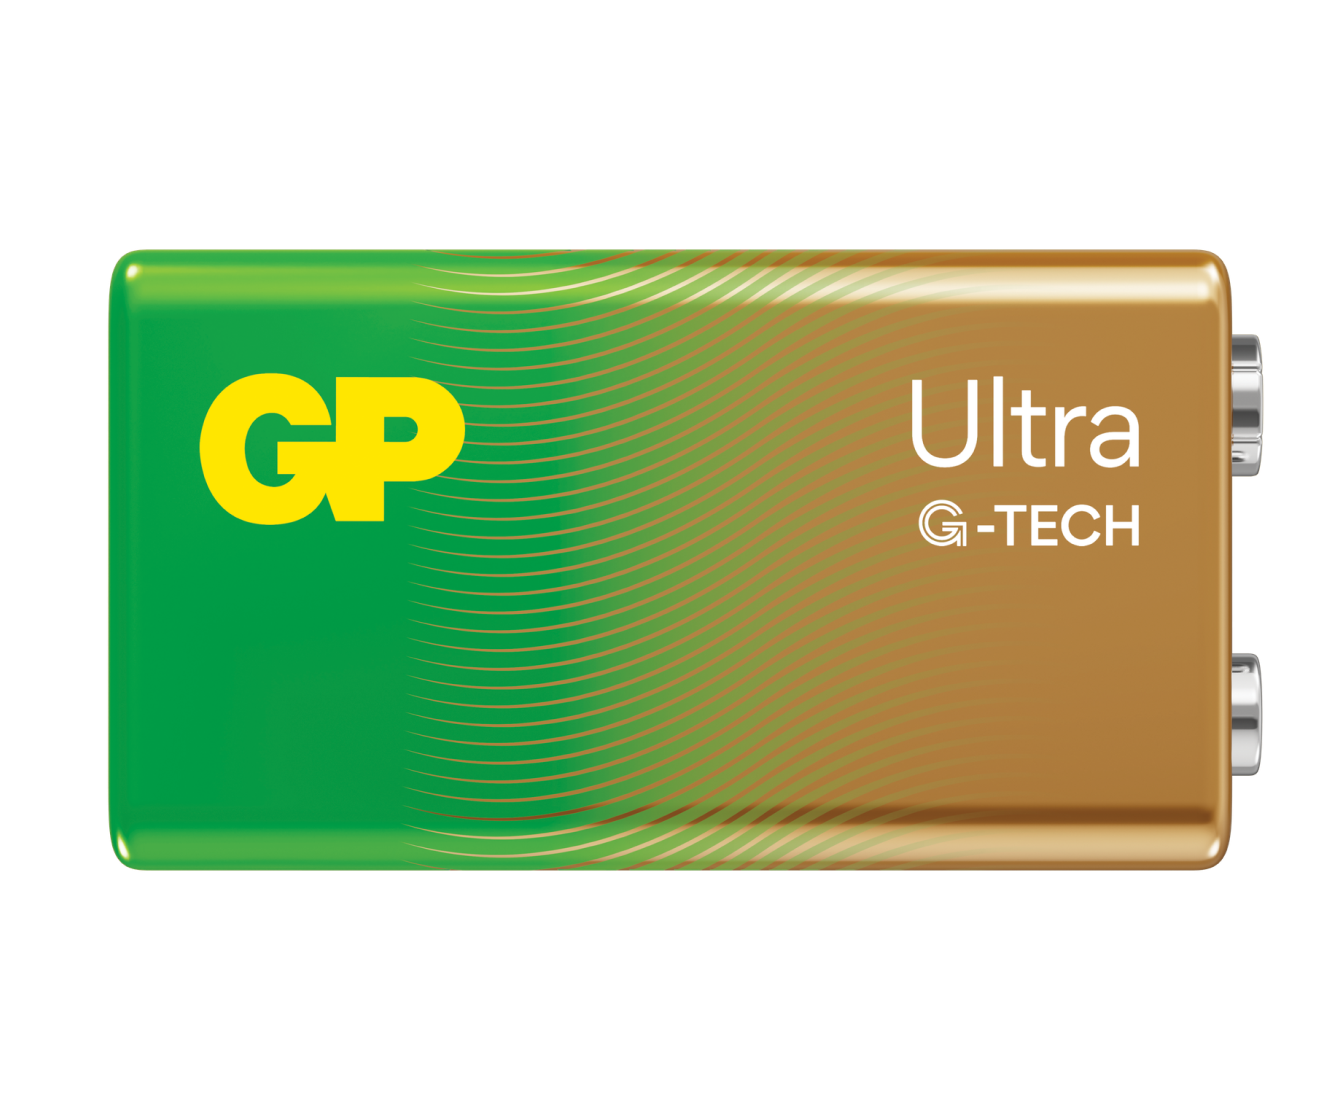 Baterie GP Ultra Alkaline 9V